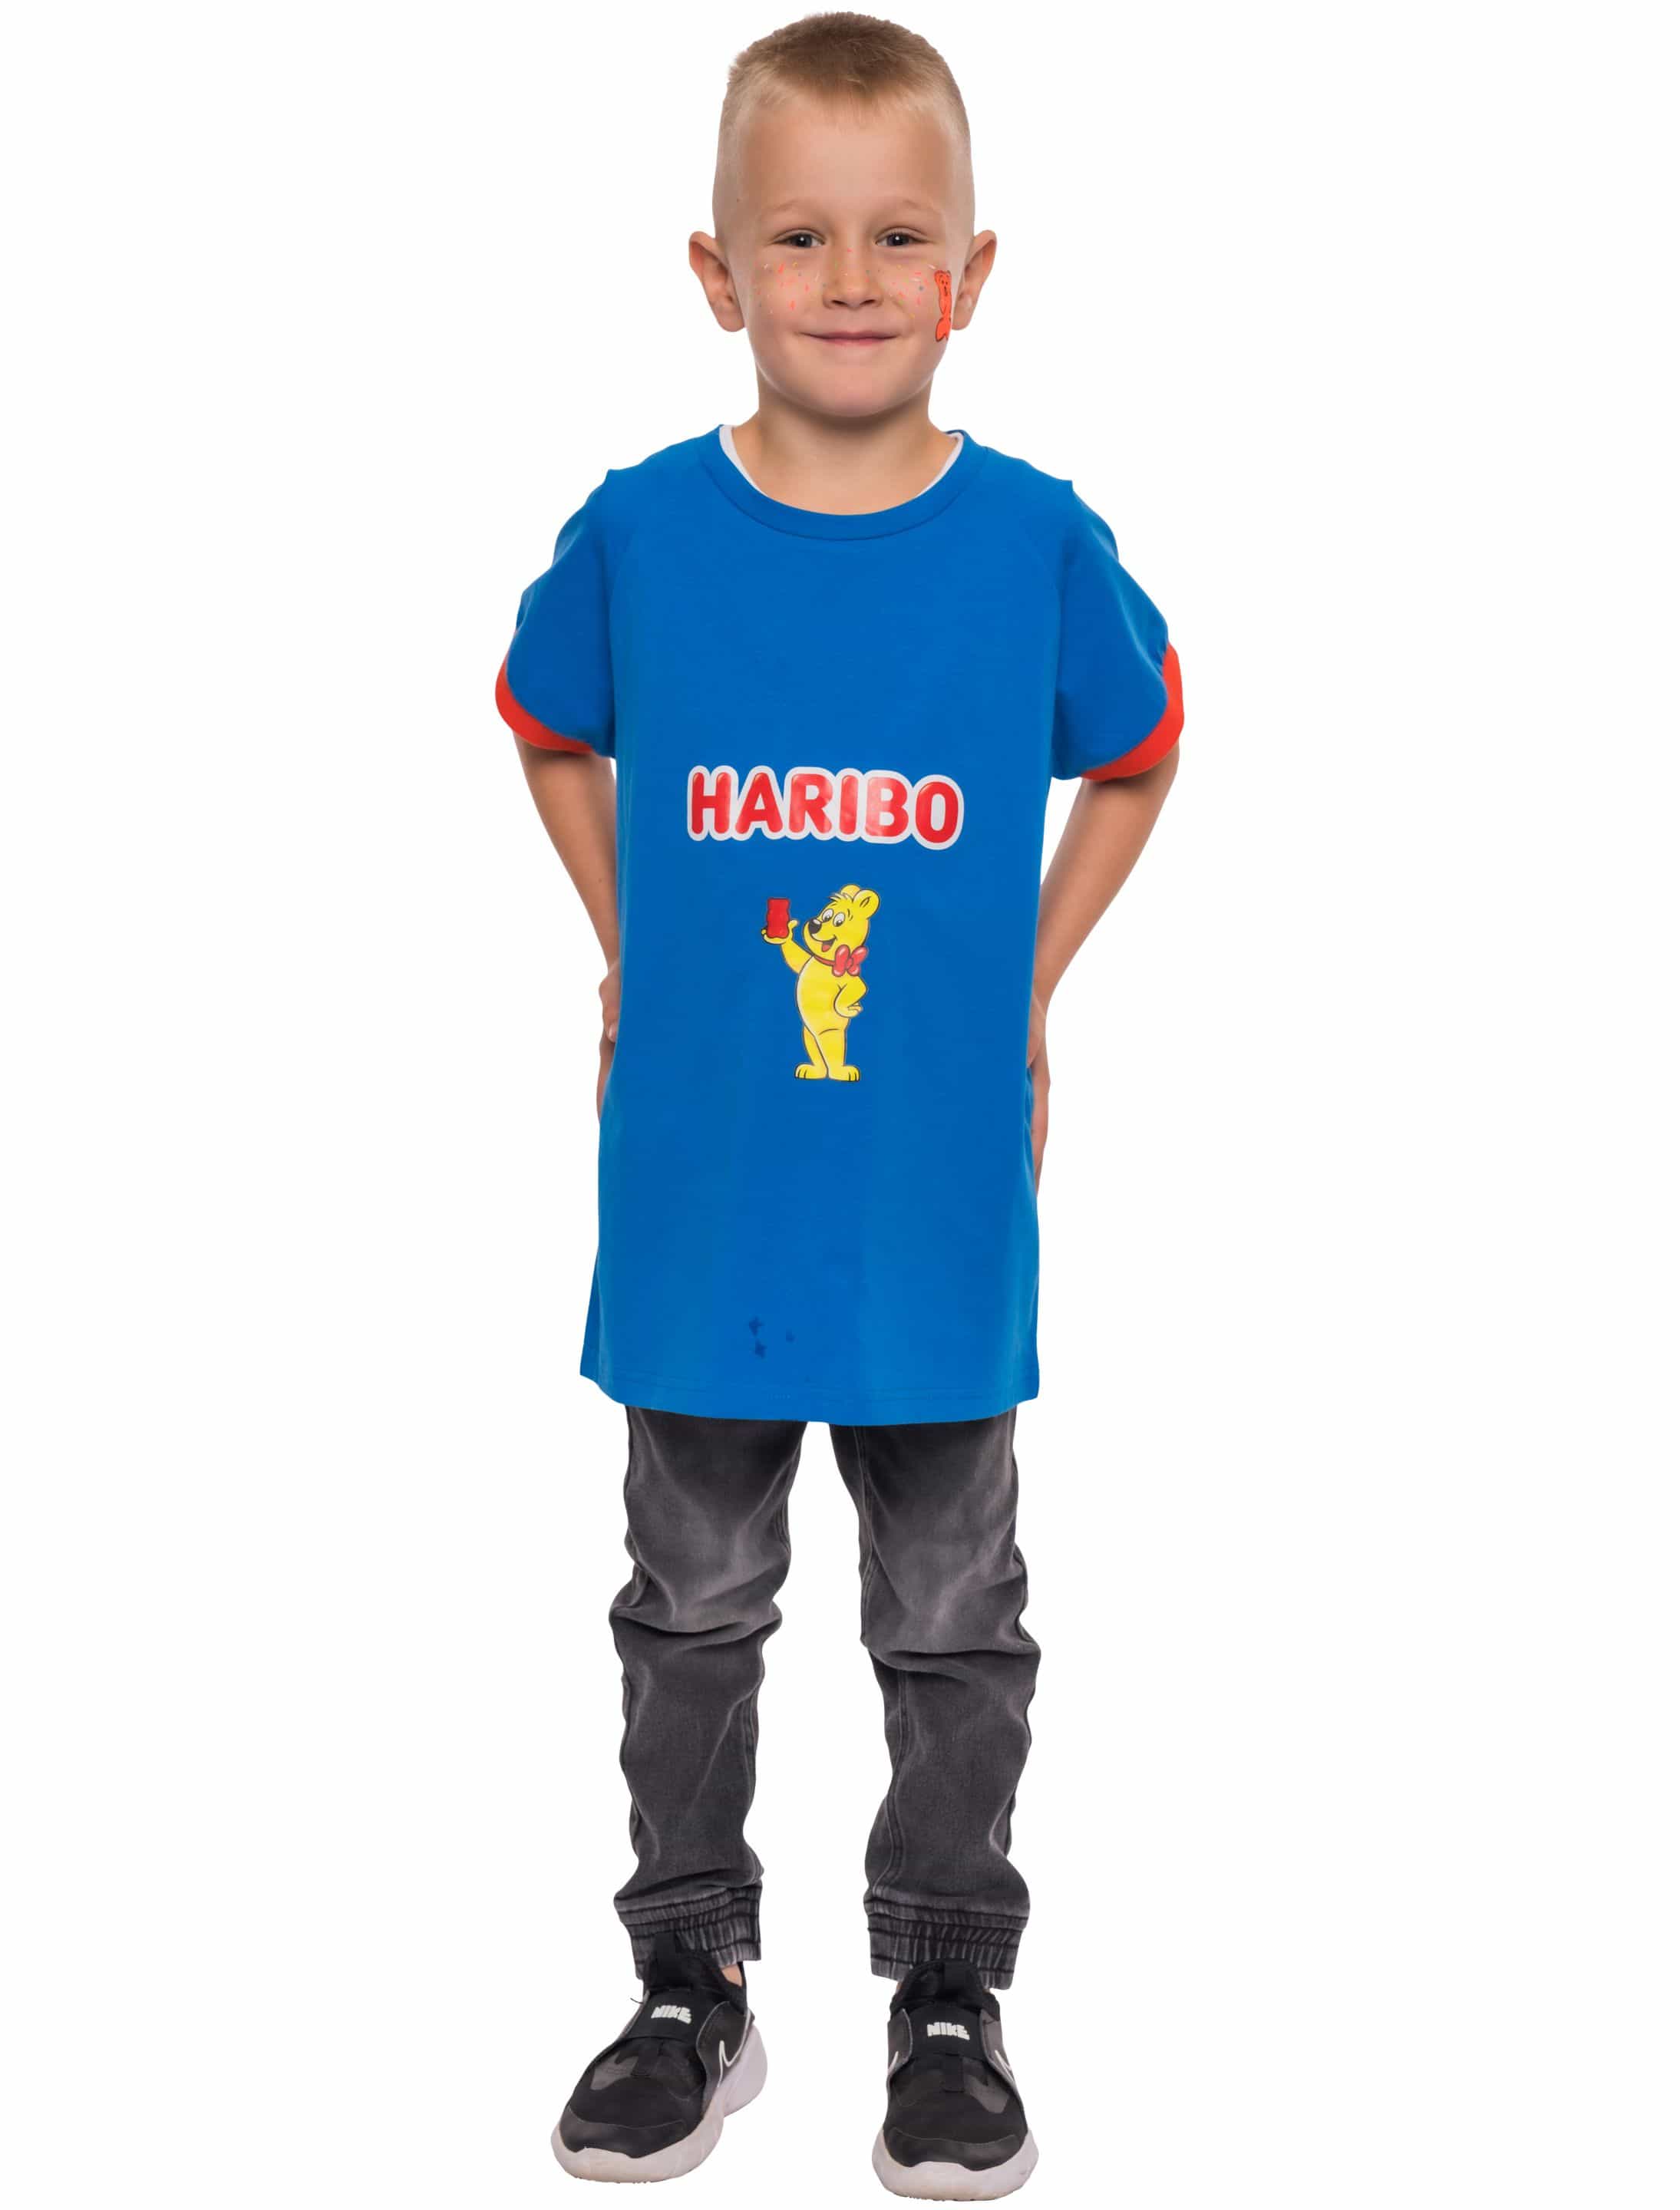 T-Shirt HARIBO Goldbären blau 140